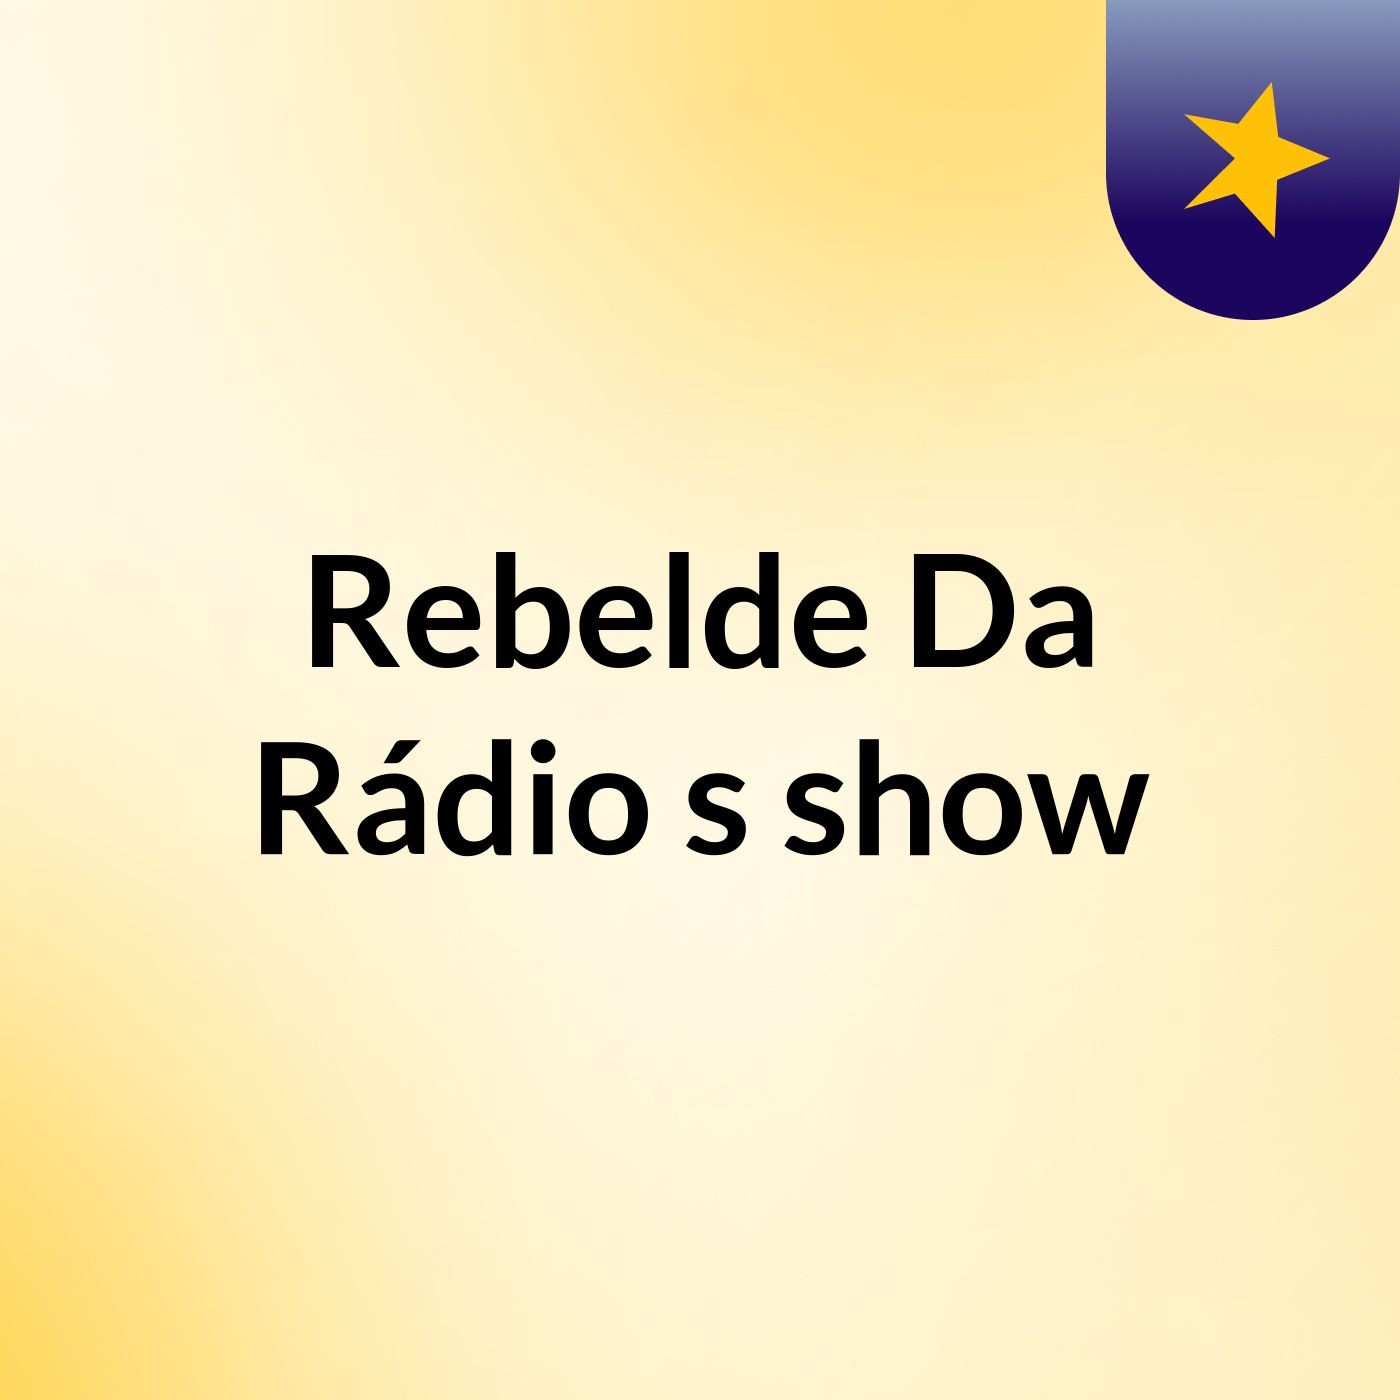 Rebelde Da Rádio's show